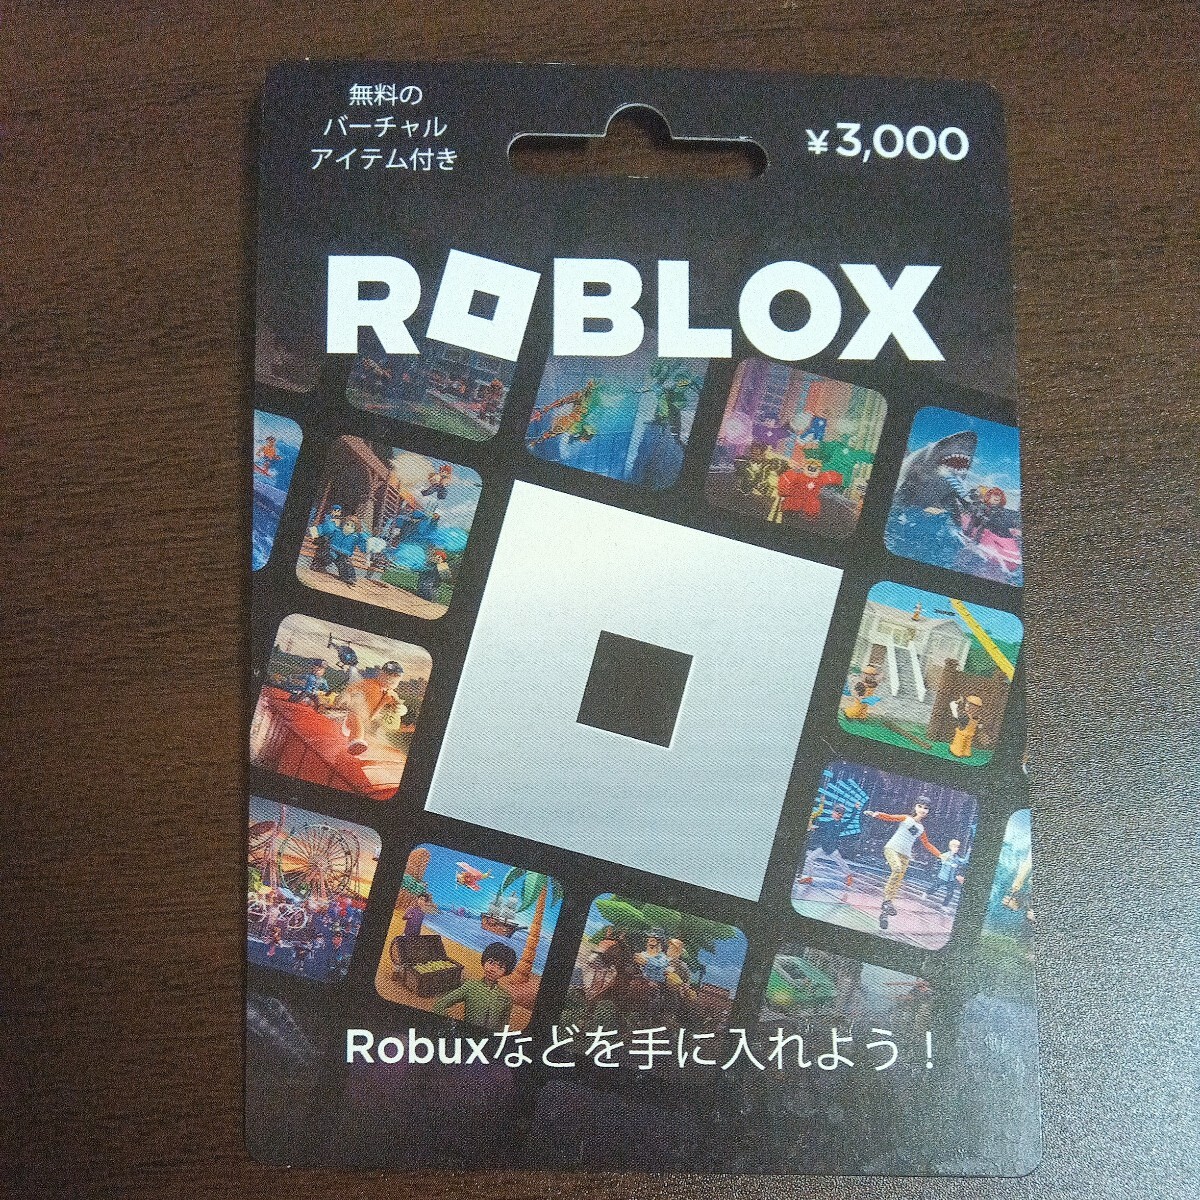 3000 jpy minute ro block s(ROBLOX) prepaid card 